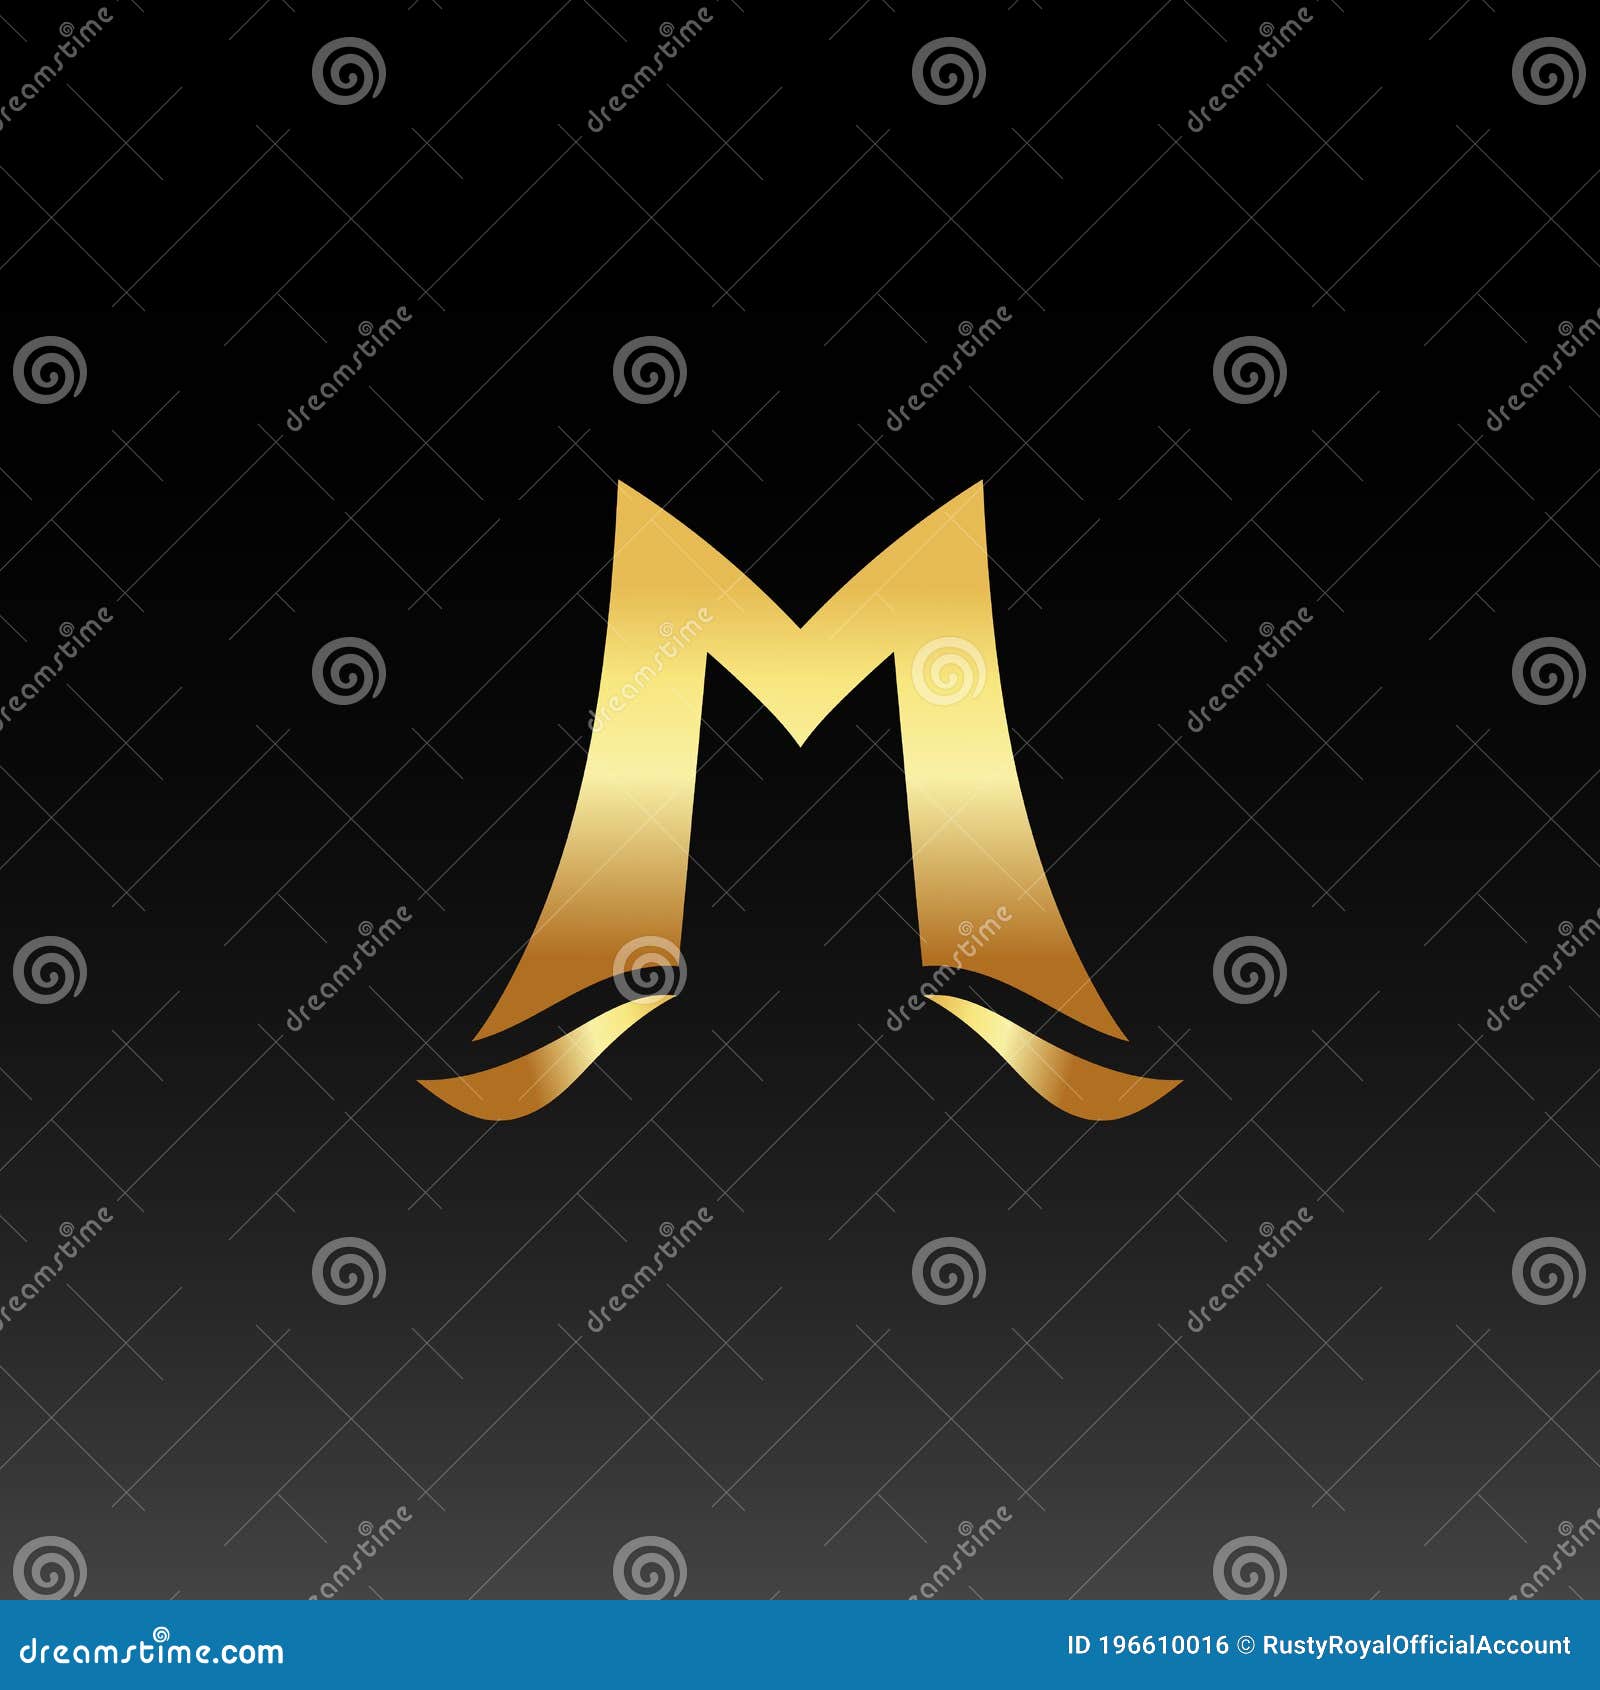 Royal m logo Stock Photos, Royalty Free Royal m logo Images